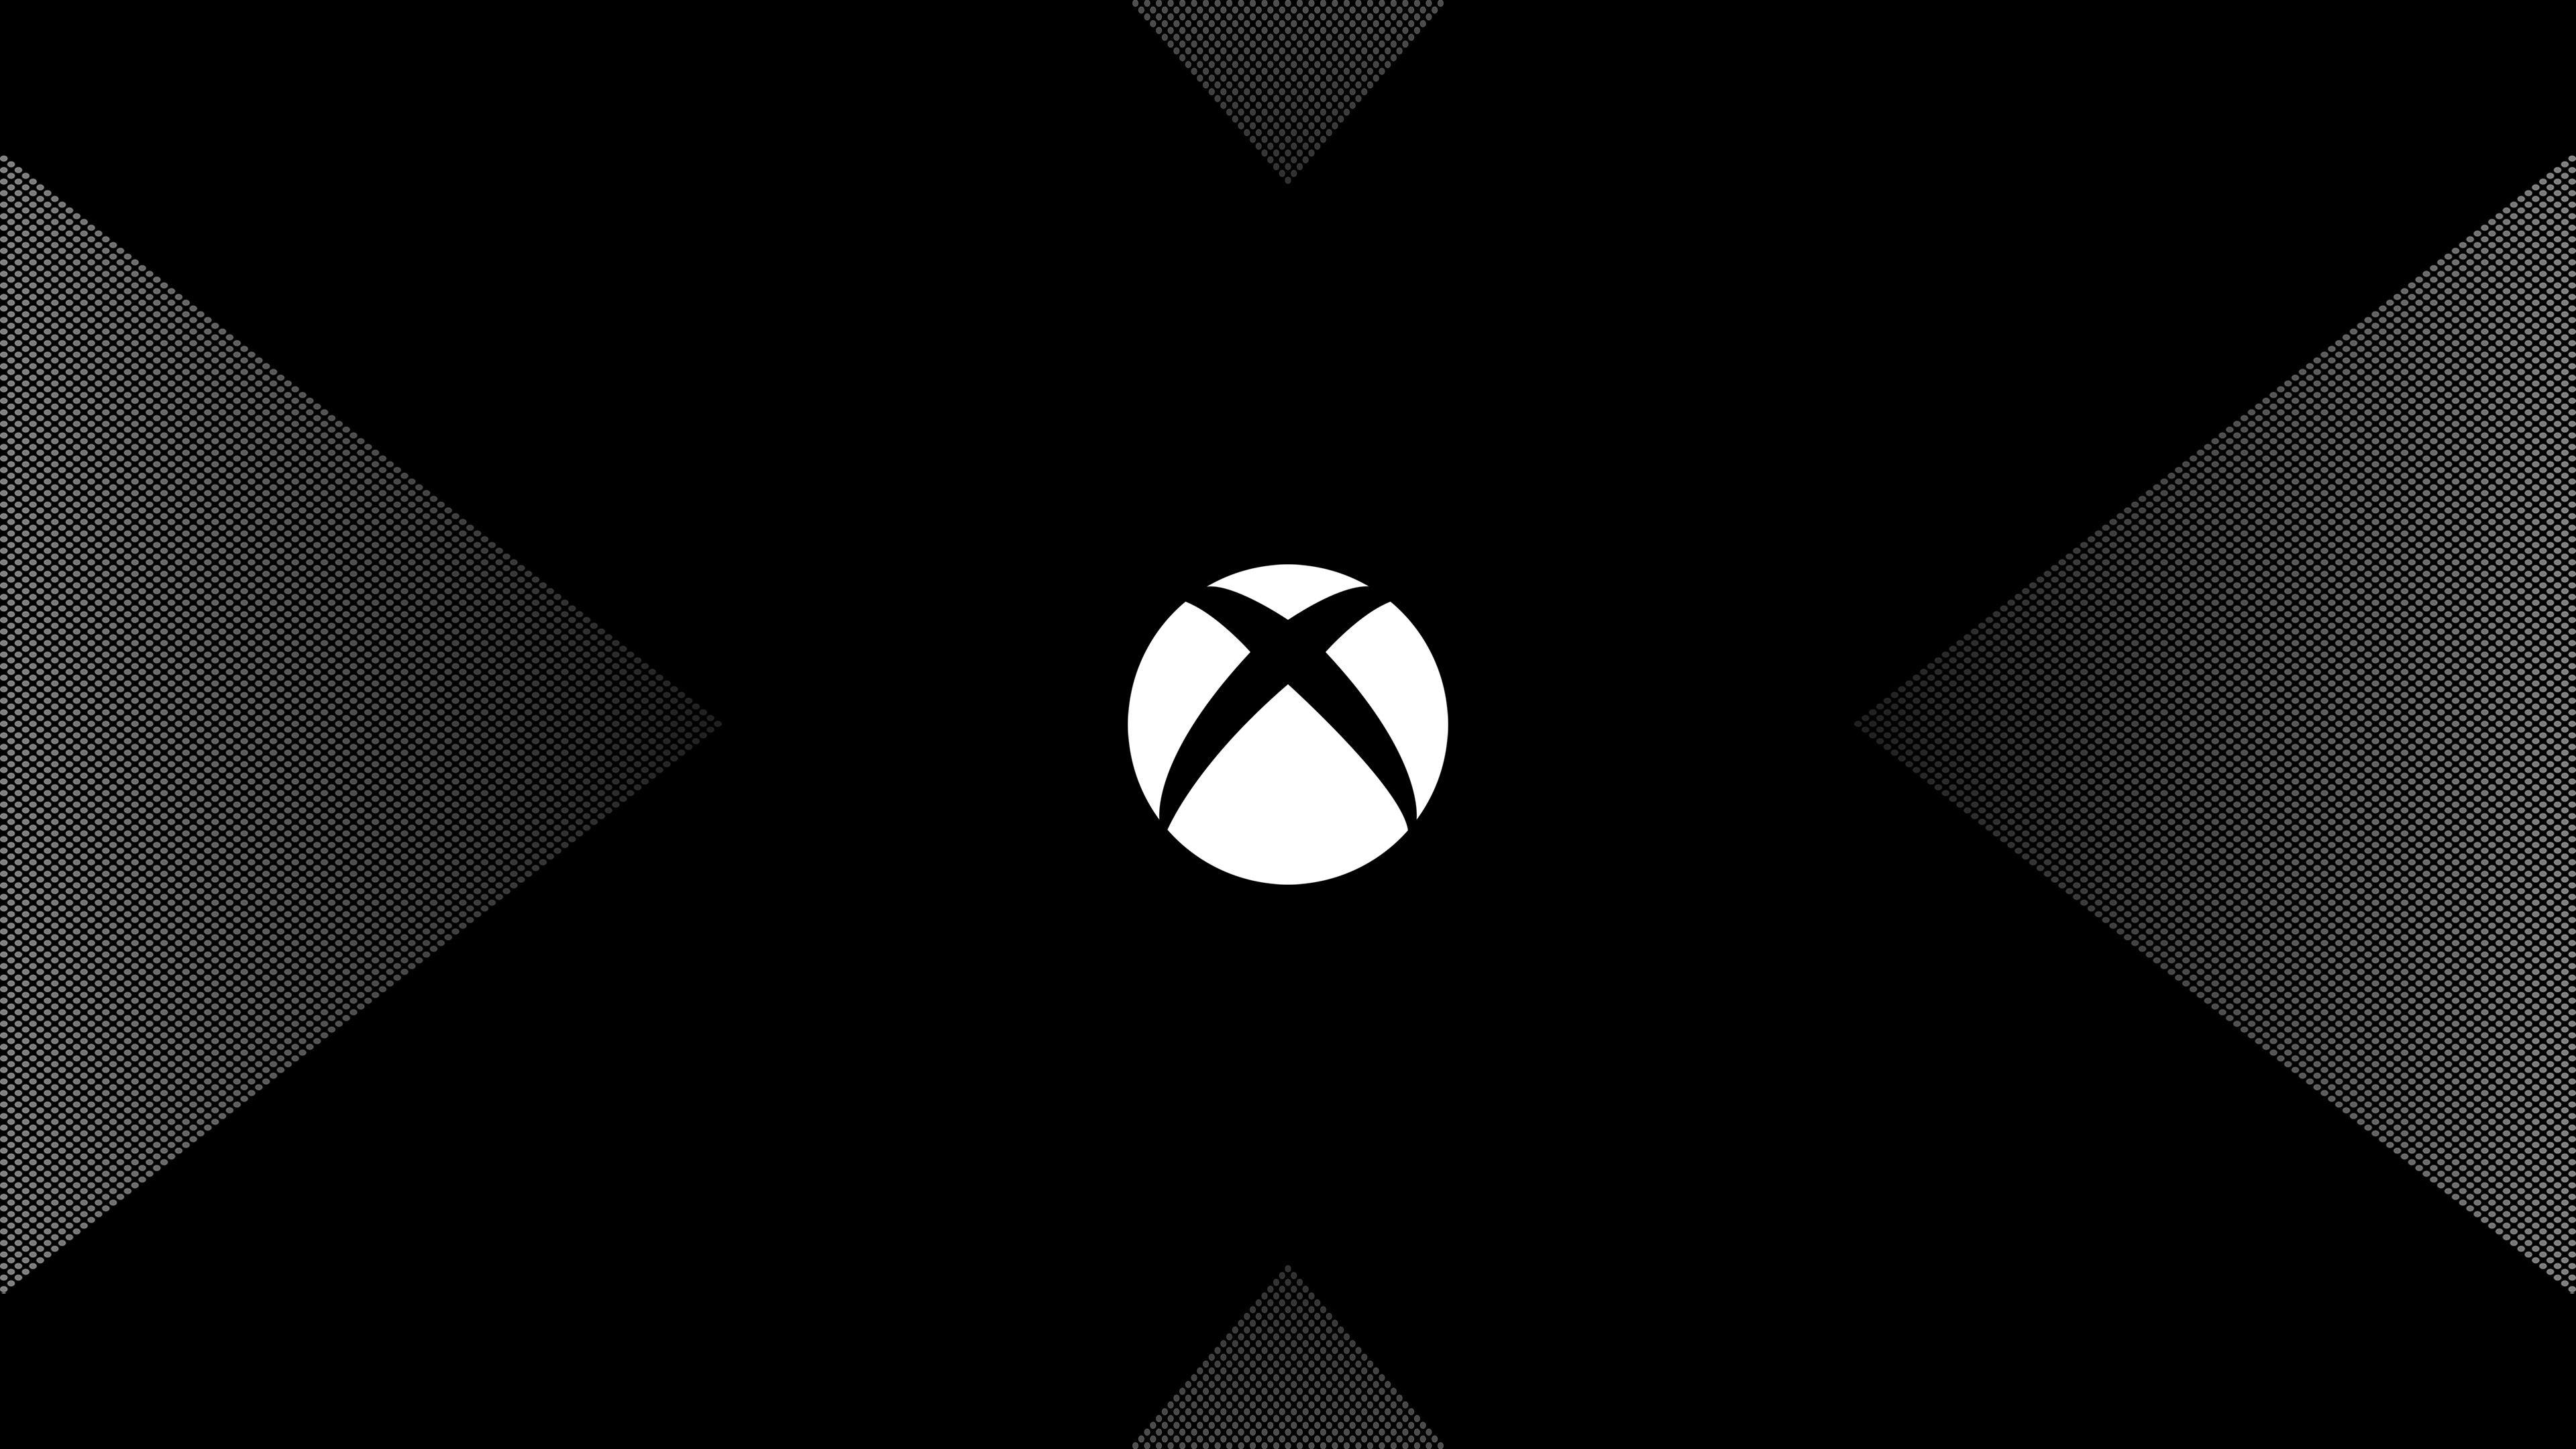 4K-resolution Black and White Logo - Wallpaper Xbox One X, Logo, Dark, Minimal, HD, 4K, Games, #10045